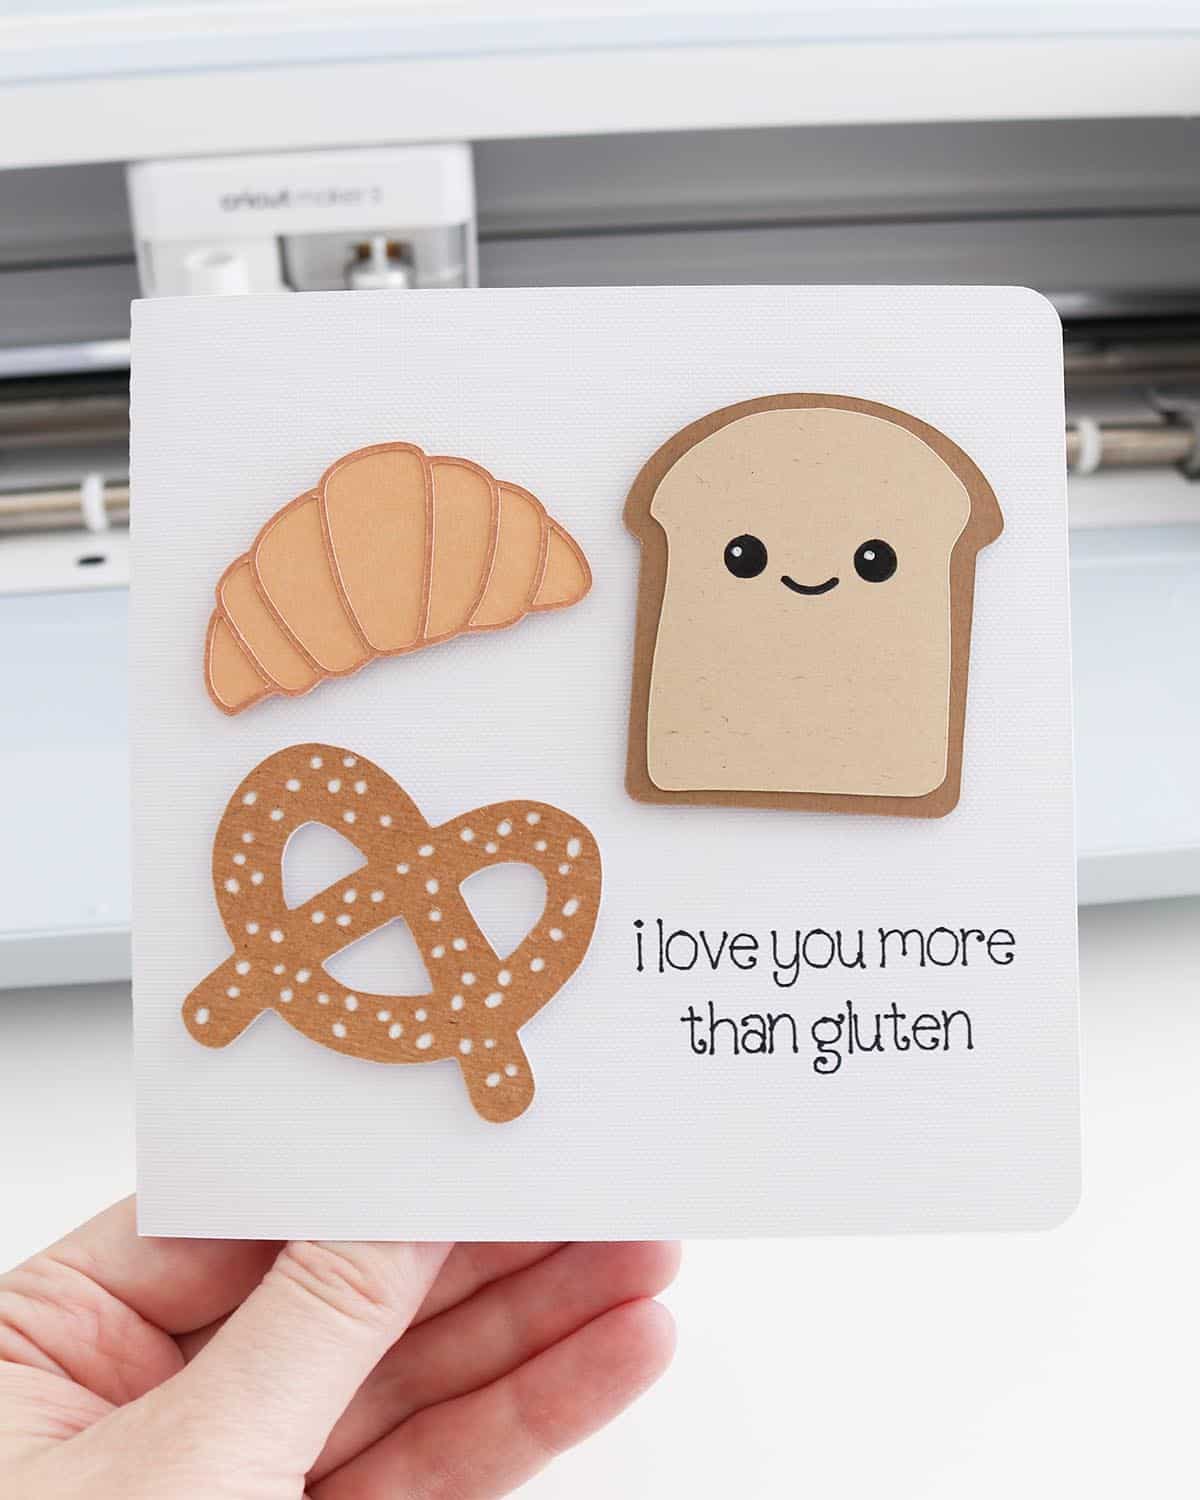 cricut valentines day card ideas: I love you more than gluten or carbs Cricut card